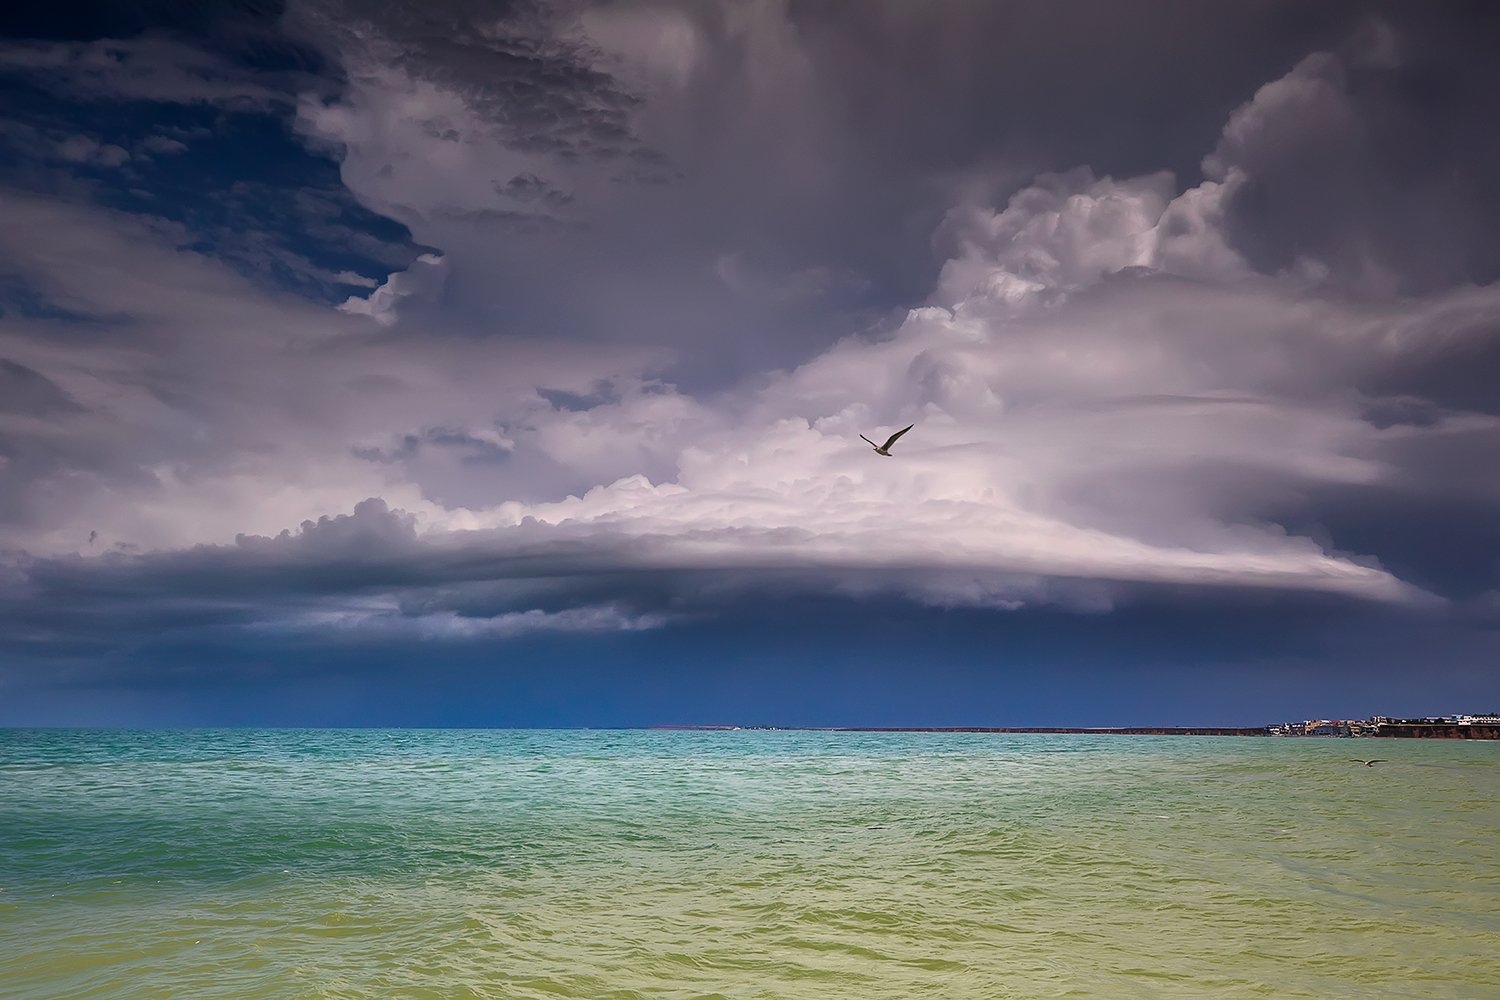 Black sea, Crimea, waves, seagull, storm, dramatic clouds, Ольга Тарасюк